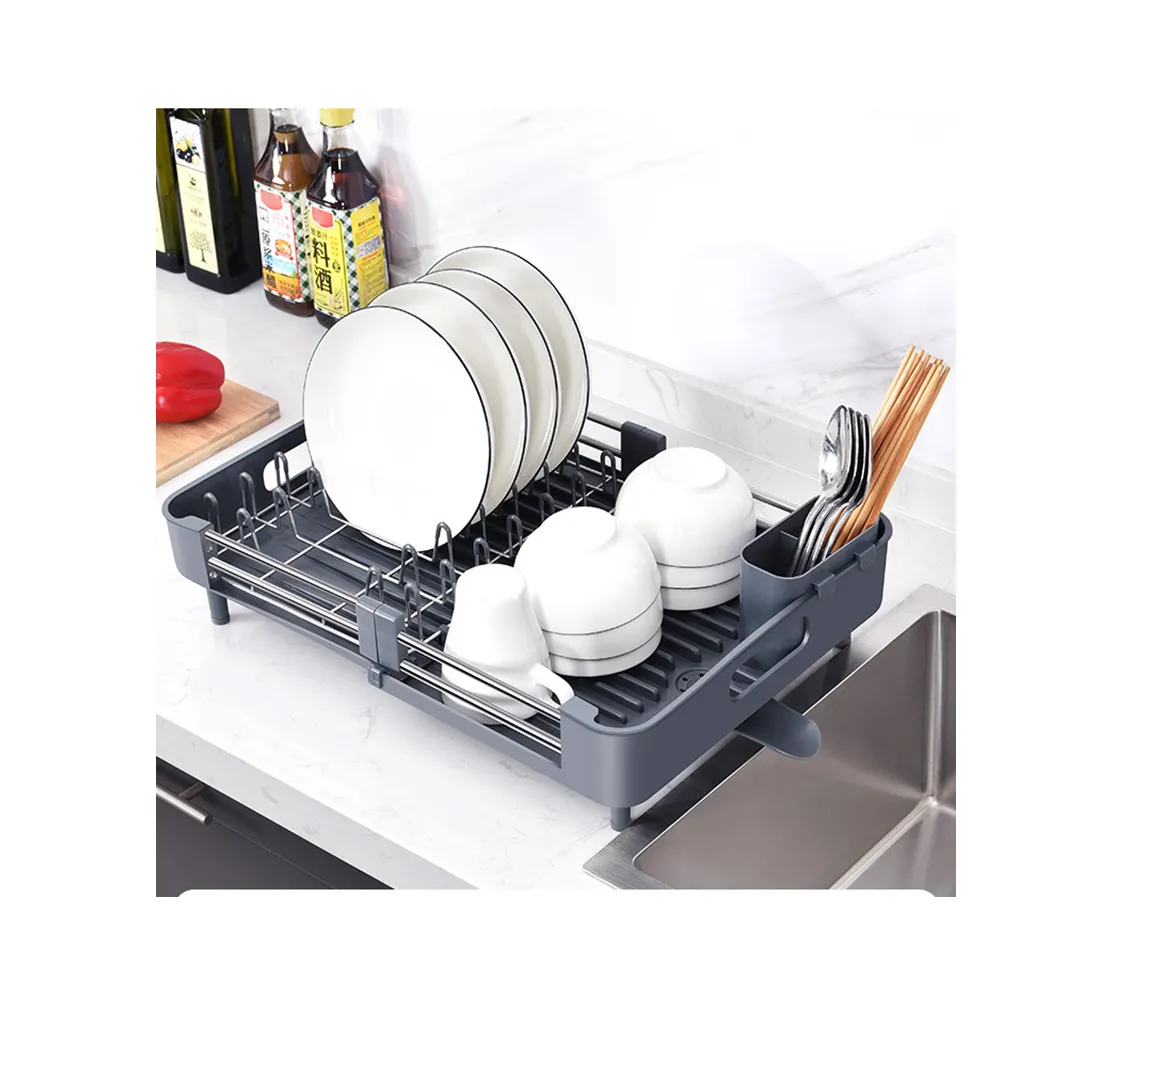 Wholesale Stainless Steel Expandable Dish Drying Rack Kitchen Sink Rack Organizer Holder Drainer Storage Dish Shelf